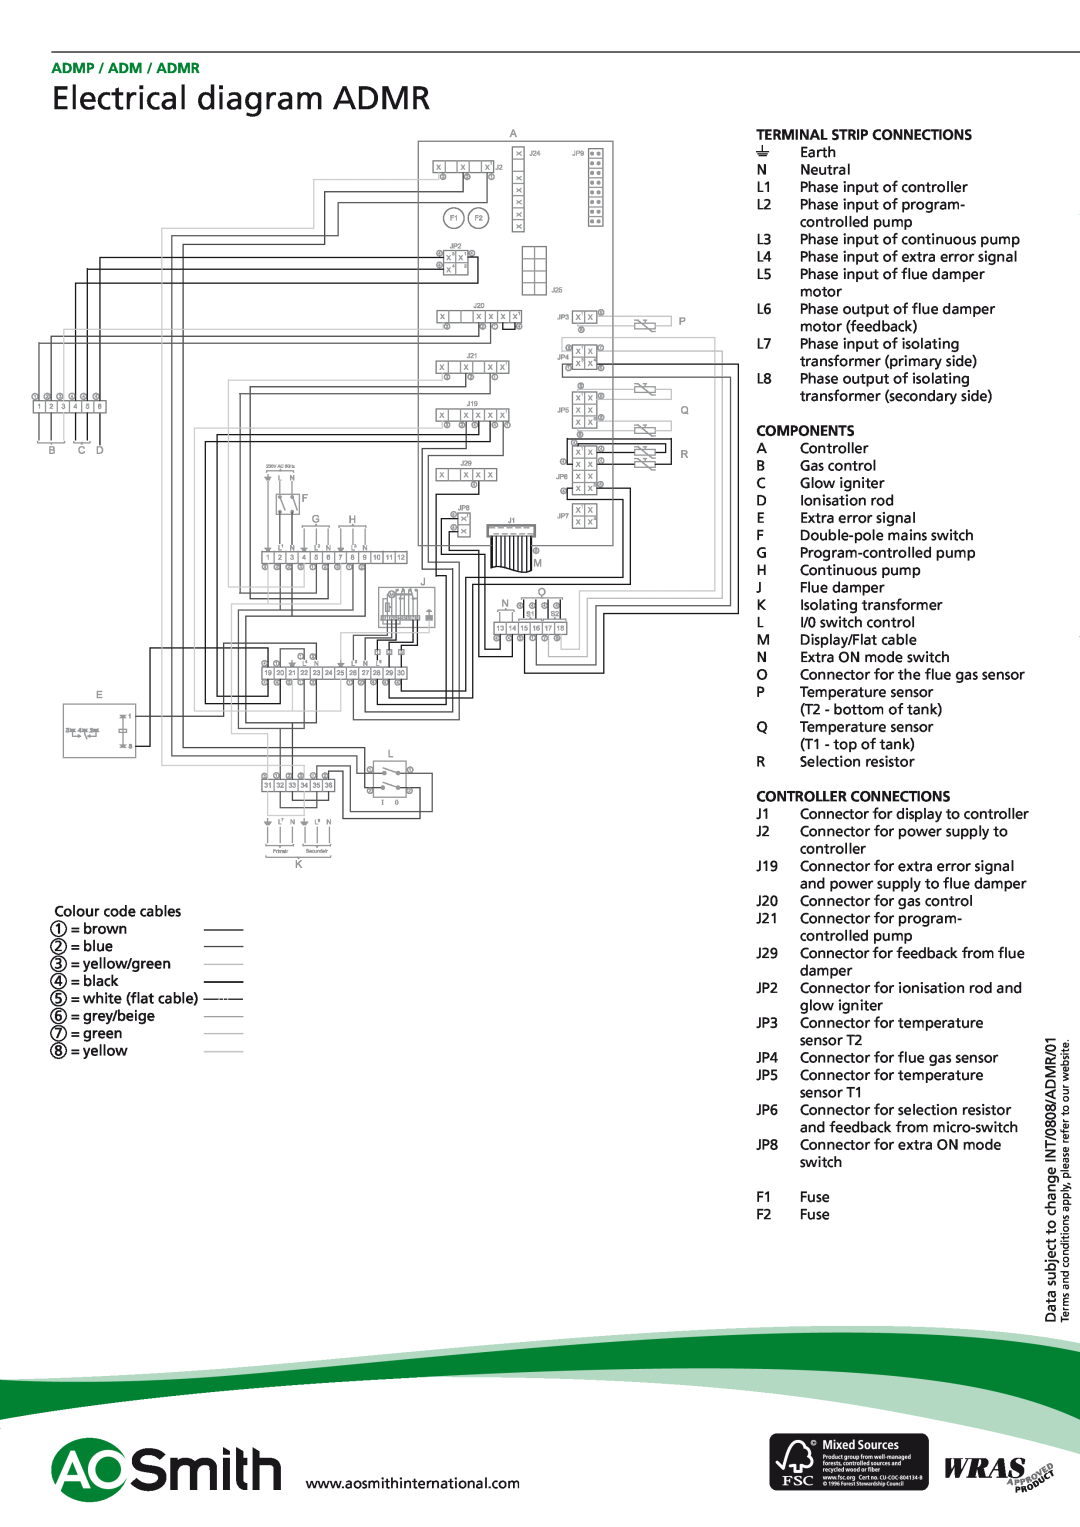 A.O. Smith ADMR - 40, ADMR - 80 manual Electrical diagram ADMR, Admp / Adm / Admr, Terminal Strip Connections, Components 